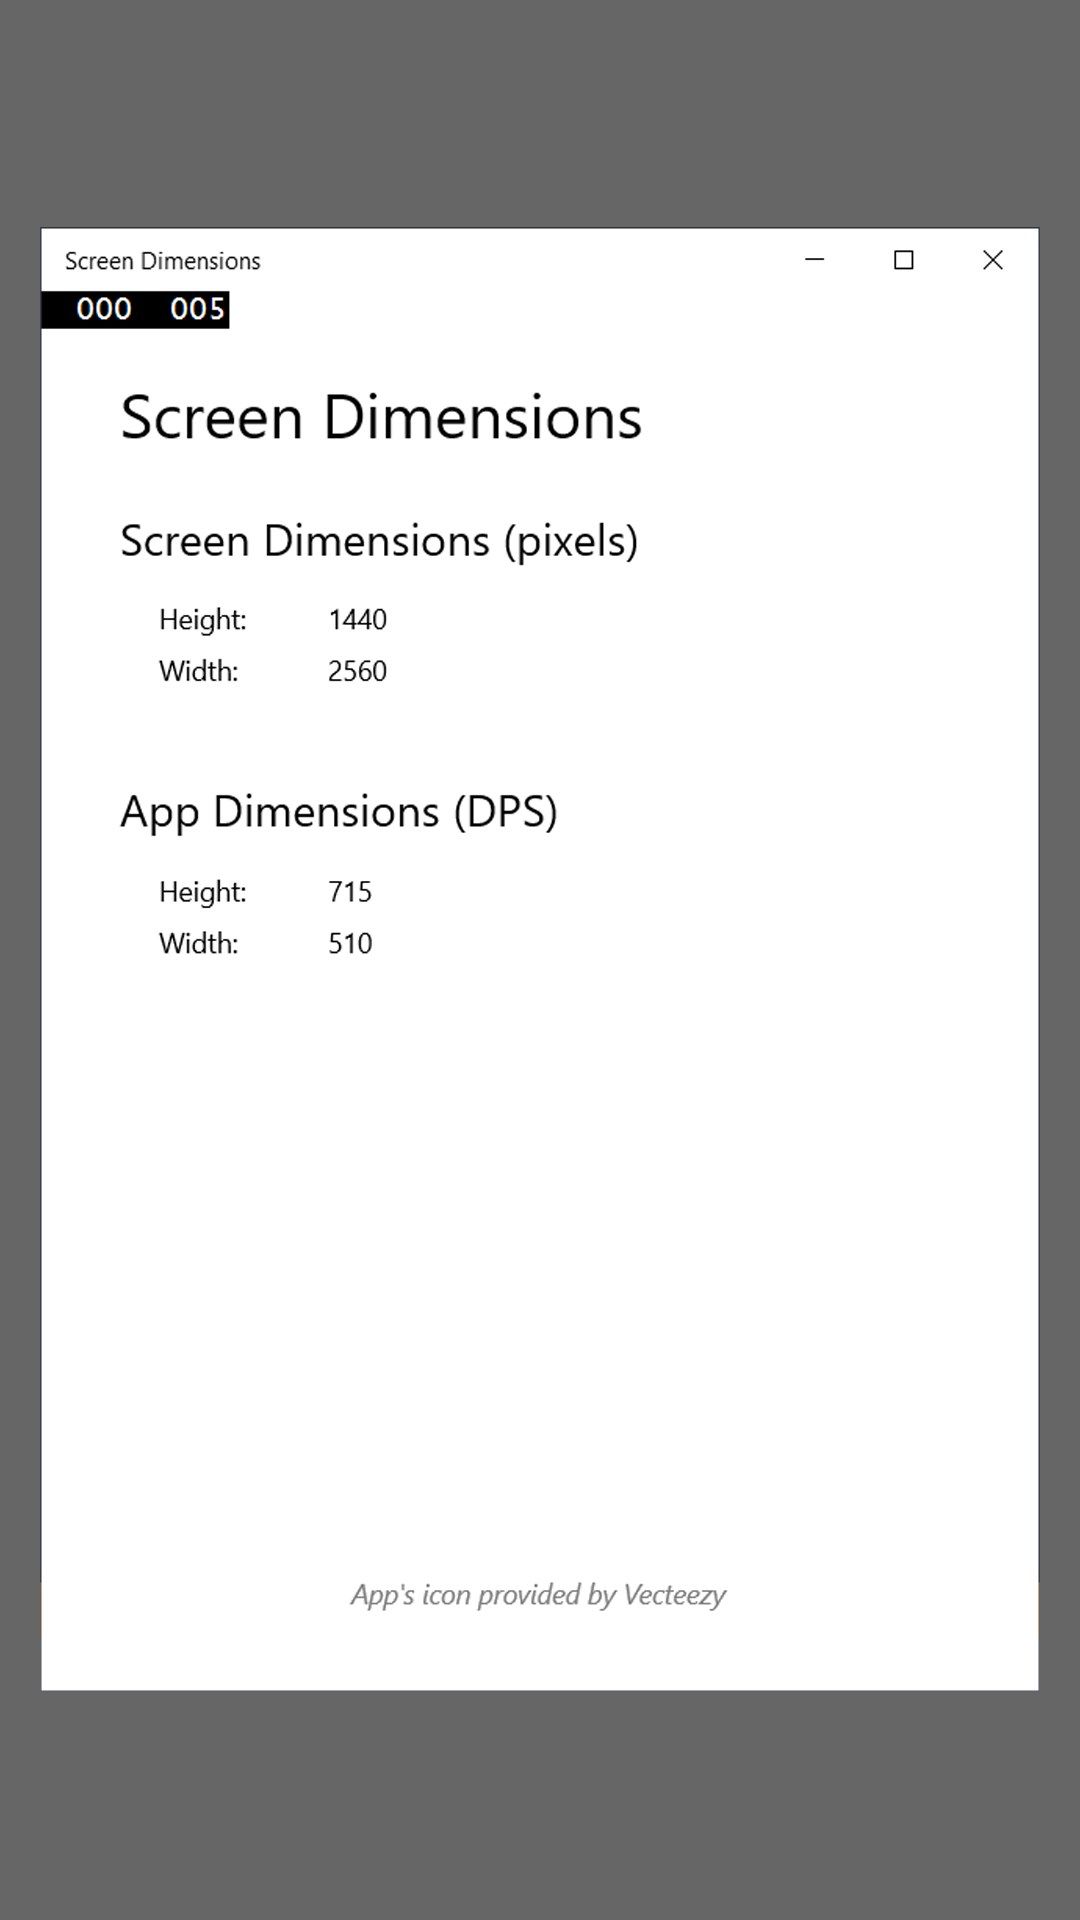 Screen Dimensions